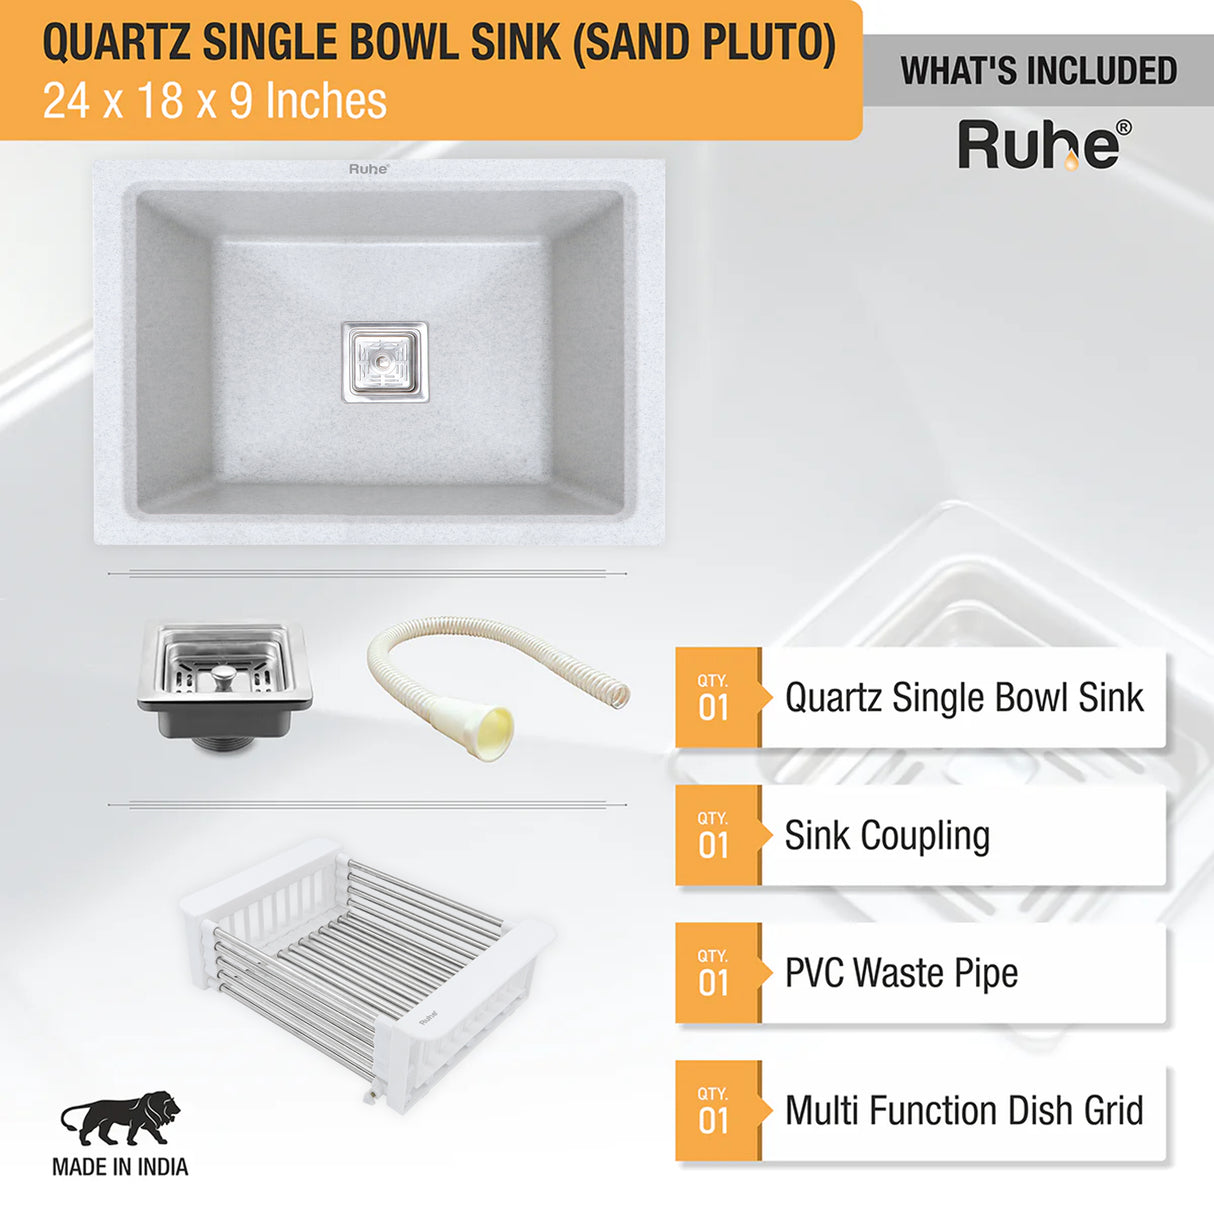 Quartz Single Bowl Kitchen Sink - Sand Pluto (24 x 18 x 9 inches) - by Ruhe®